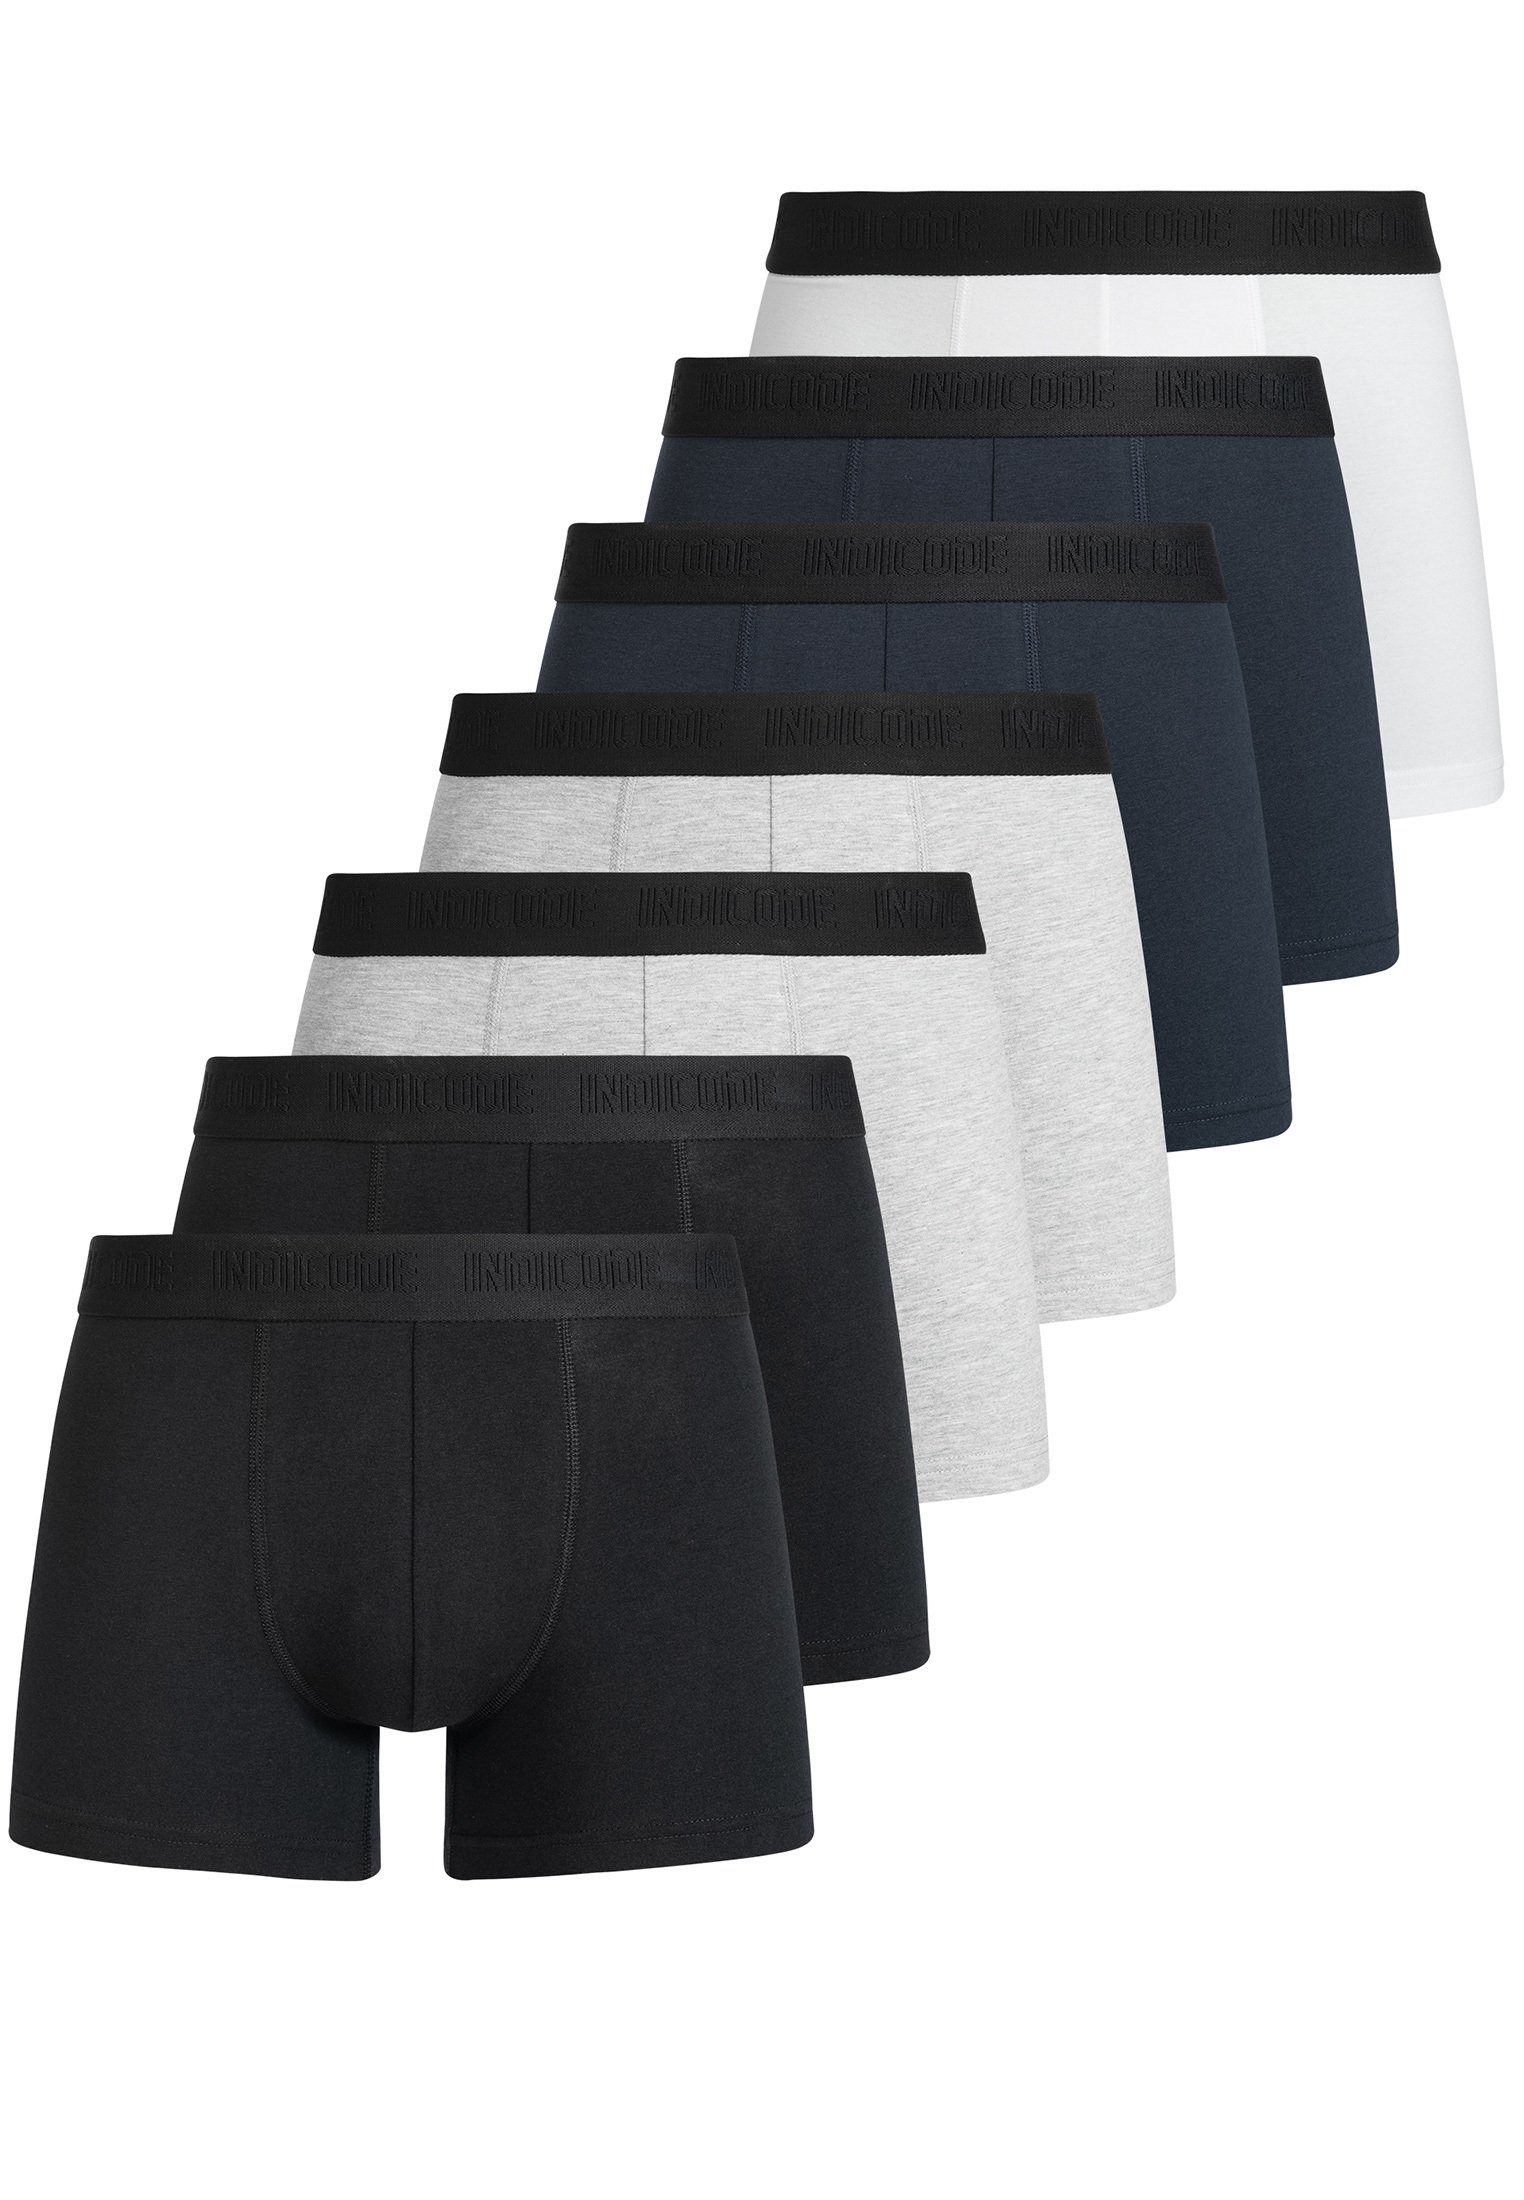 Indicode Boxershorts Copenhagen Black/Grey/Navy/White